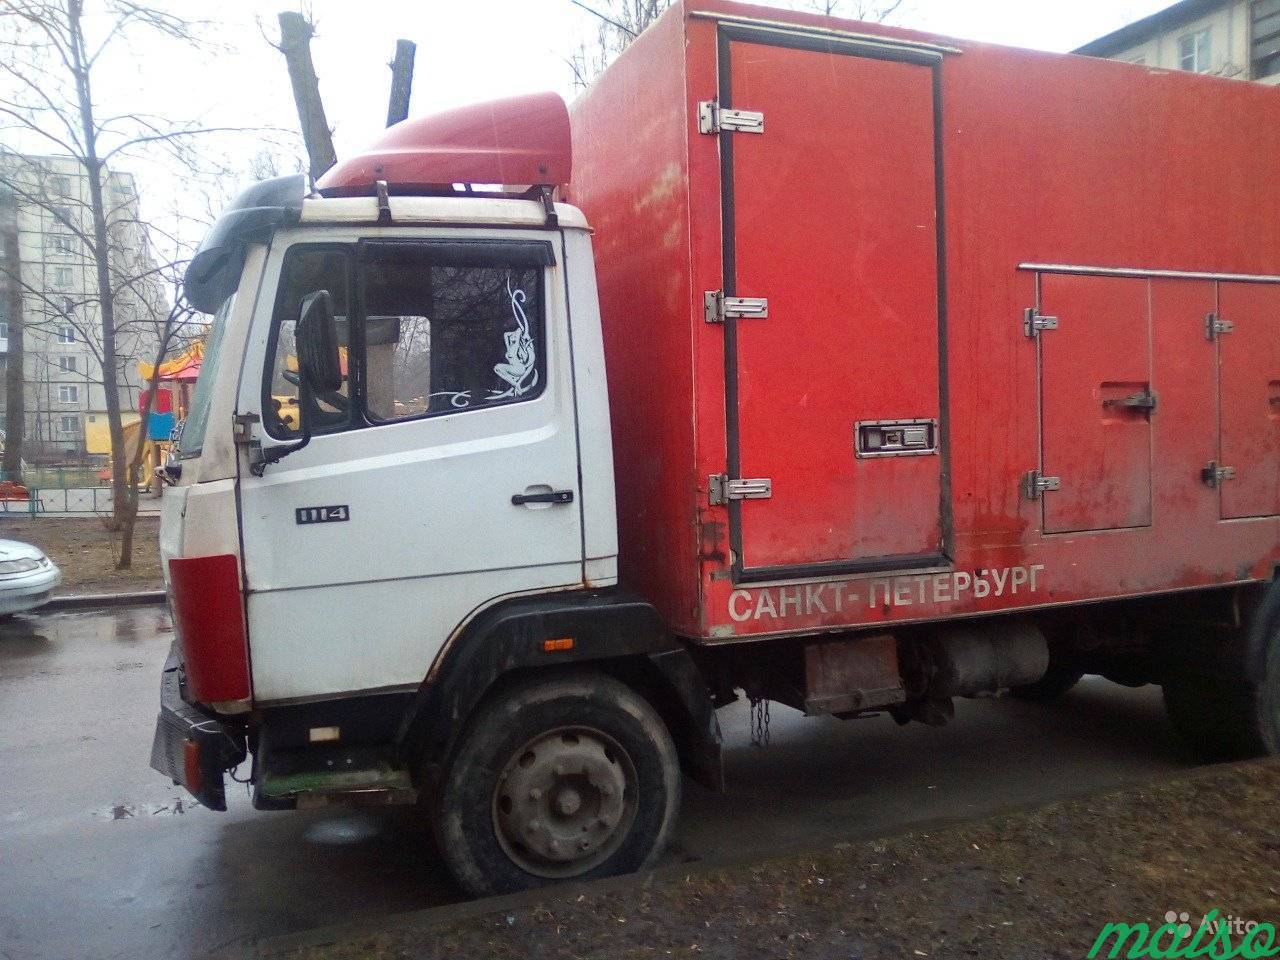 Мерседес 1114 грузовой термо-фургон в Санкт-Петербурге. Фото 1